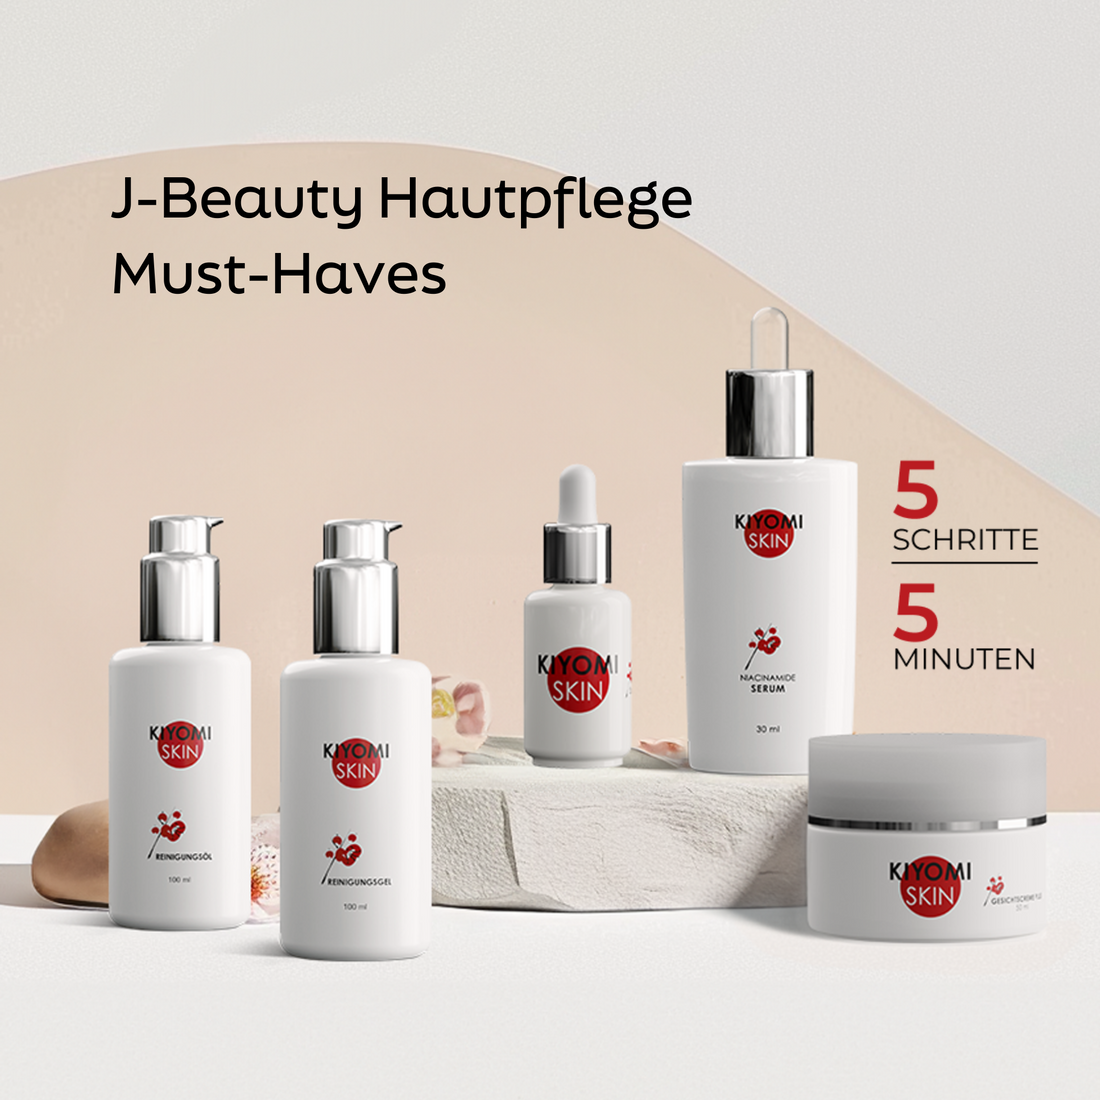 J-Beauty Hautpflege Must-Haves